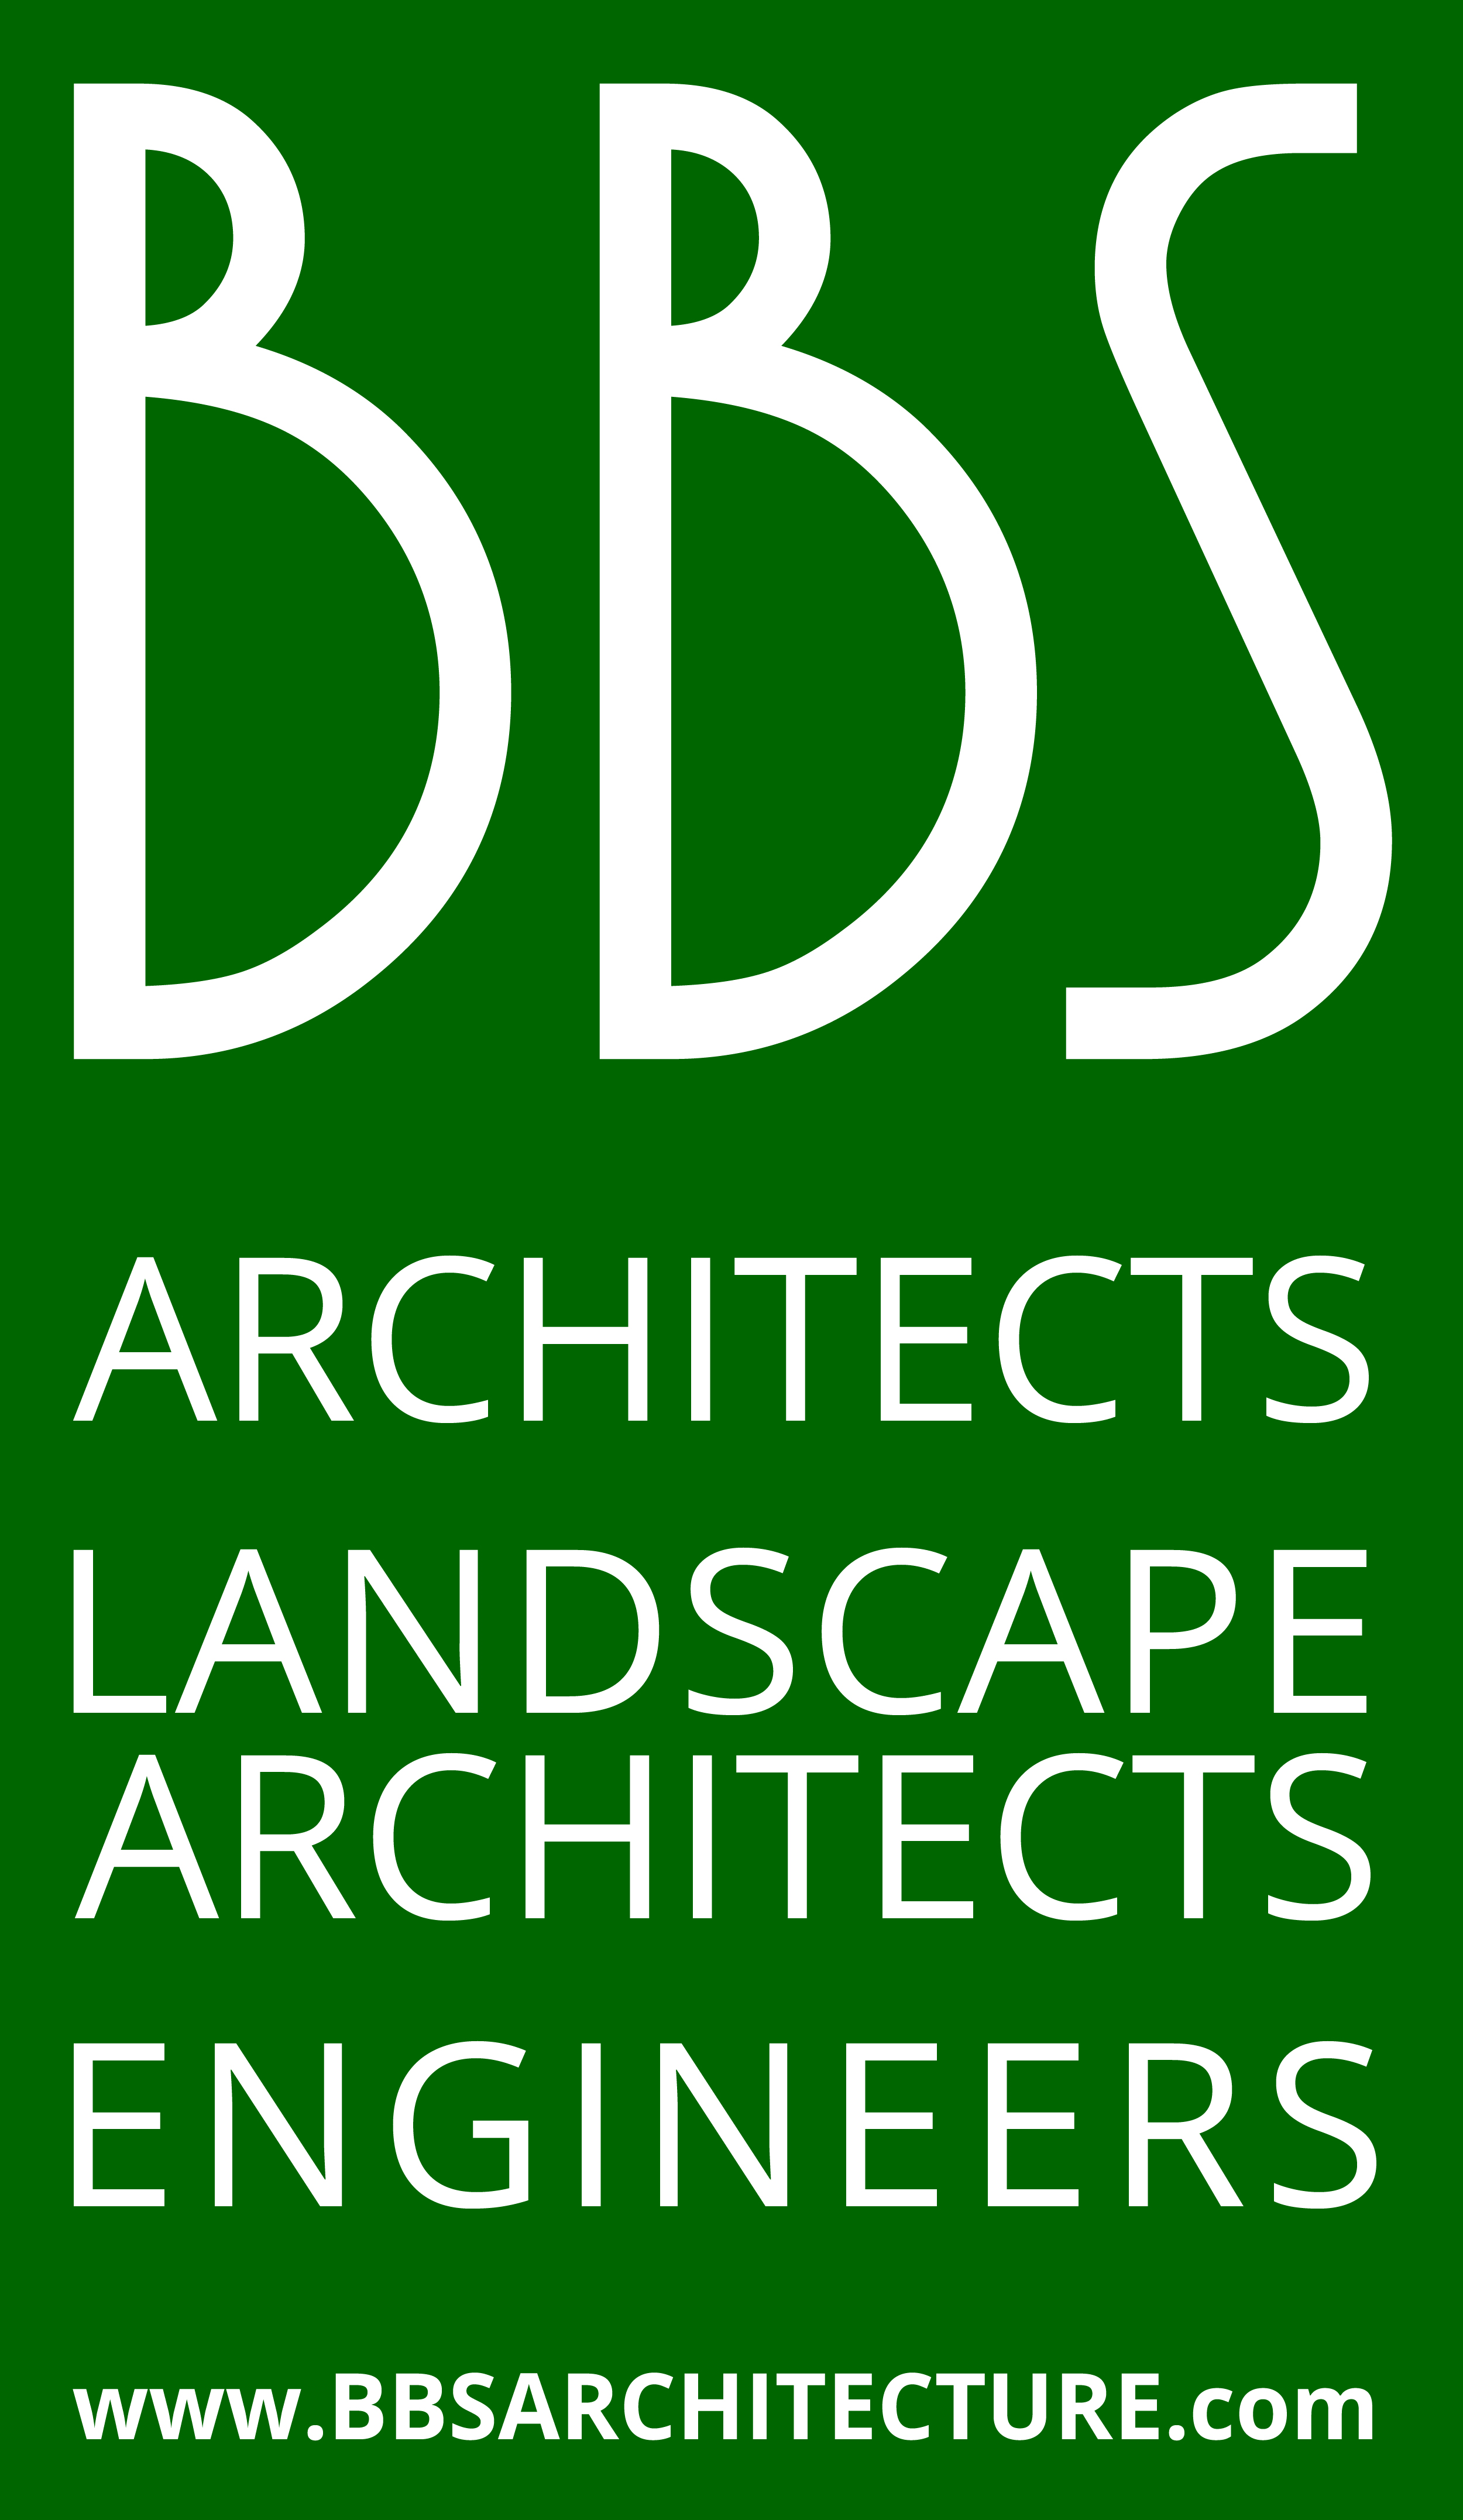 BBS Architects, Landscape Architects, & Engineers, P.C. logo